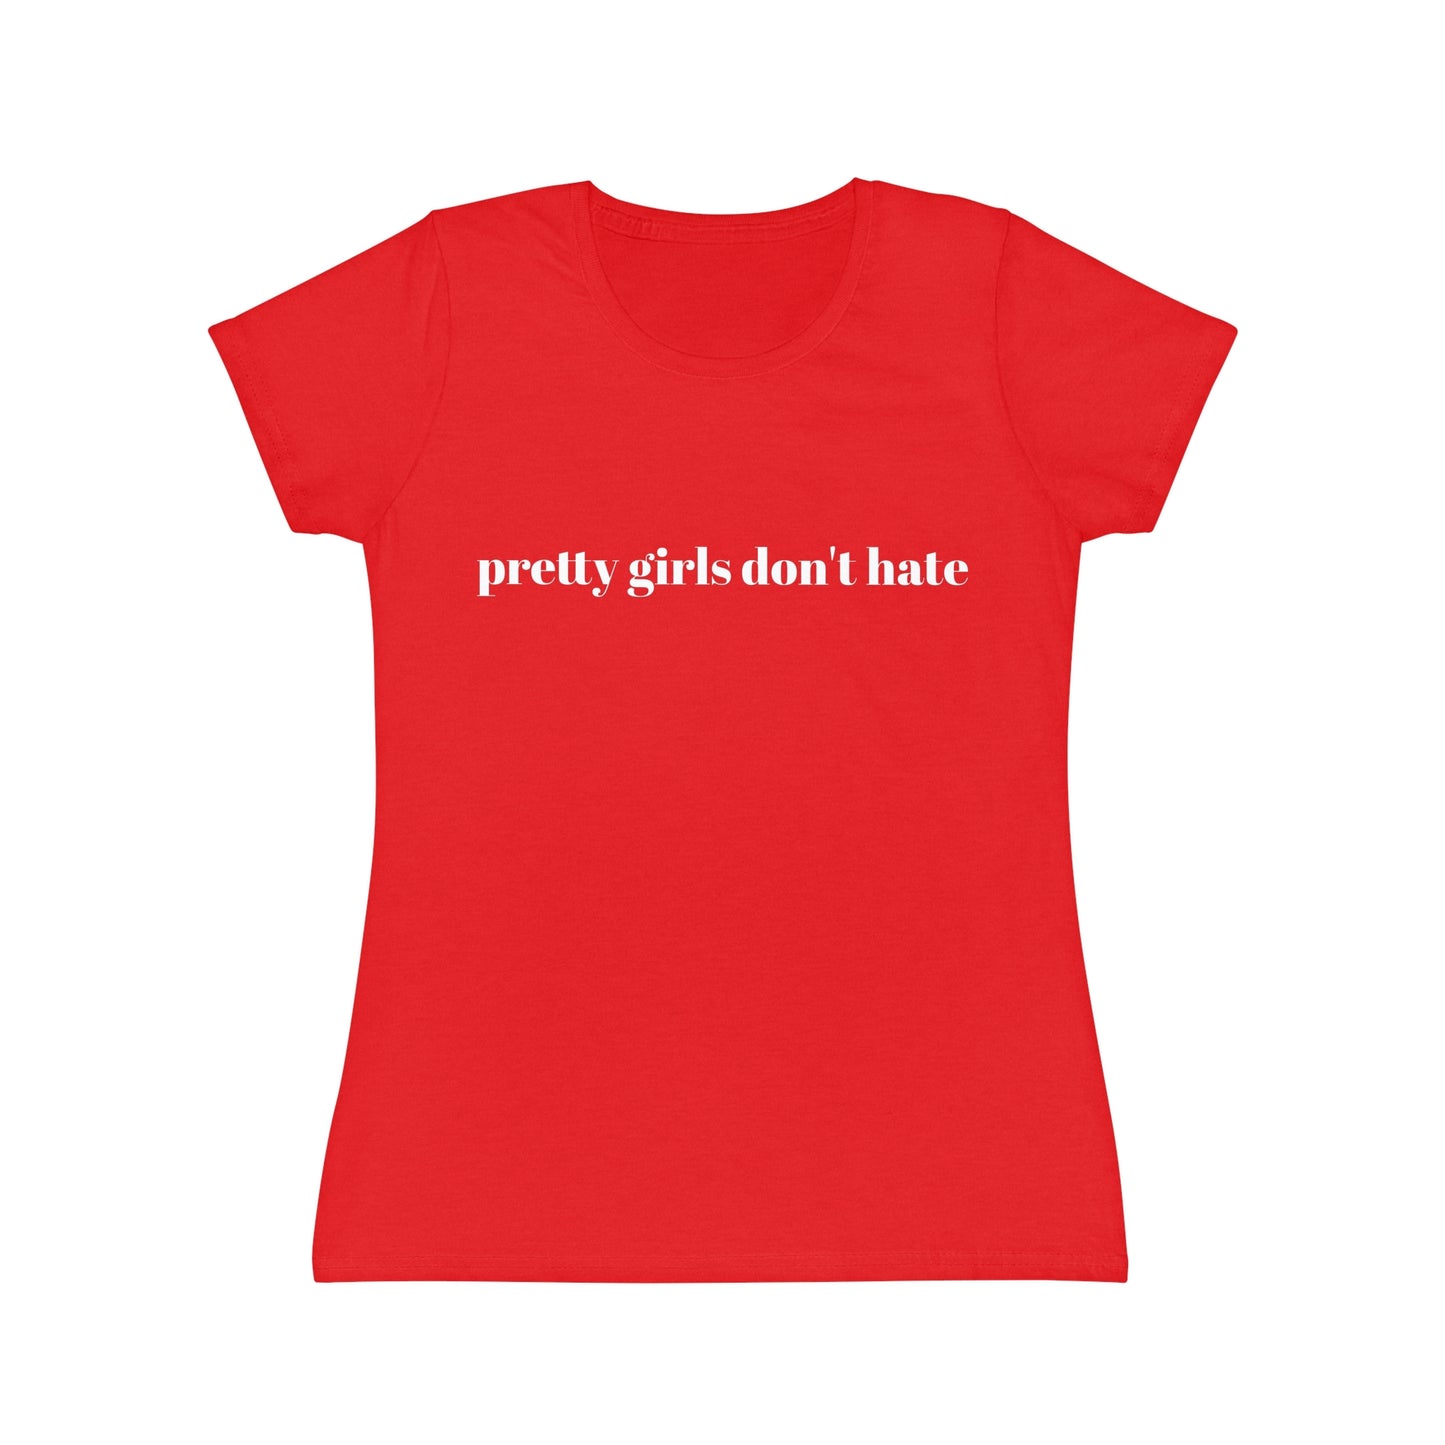 'pretty girls don't hate' Women's Iconic T-Shirt